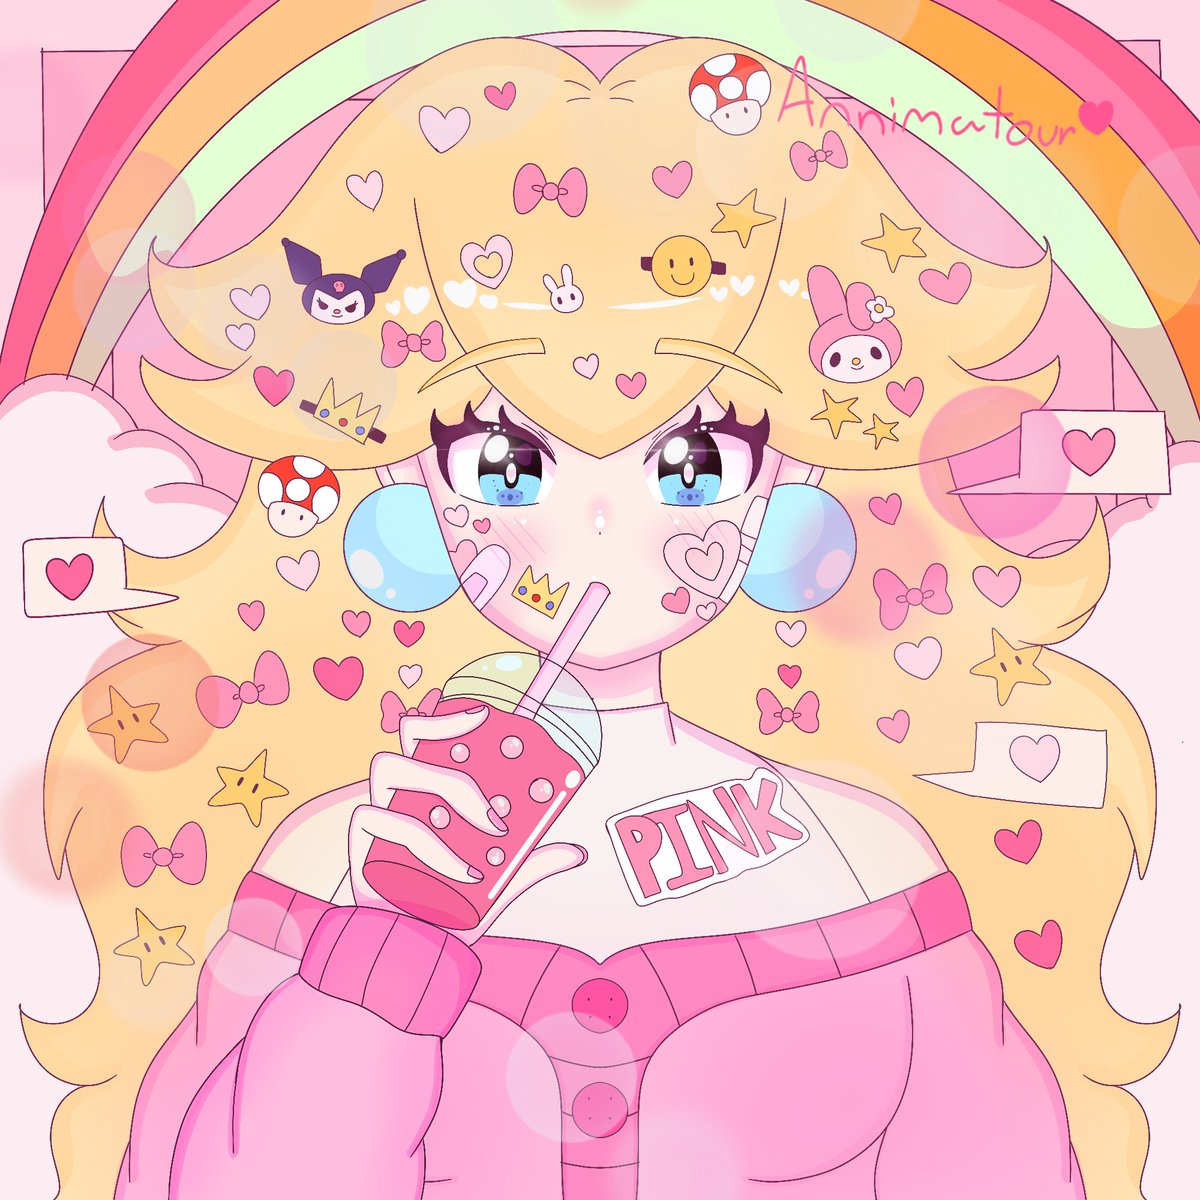 #PrincessPeach #PrincessPeachFanArt #Fanart #Nintendo princess peach selfie